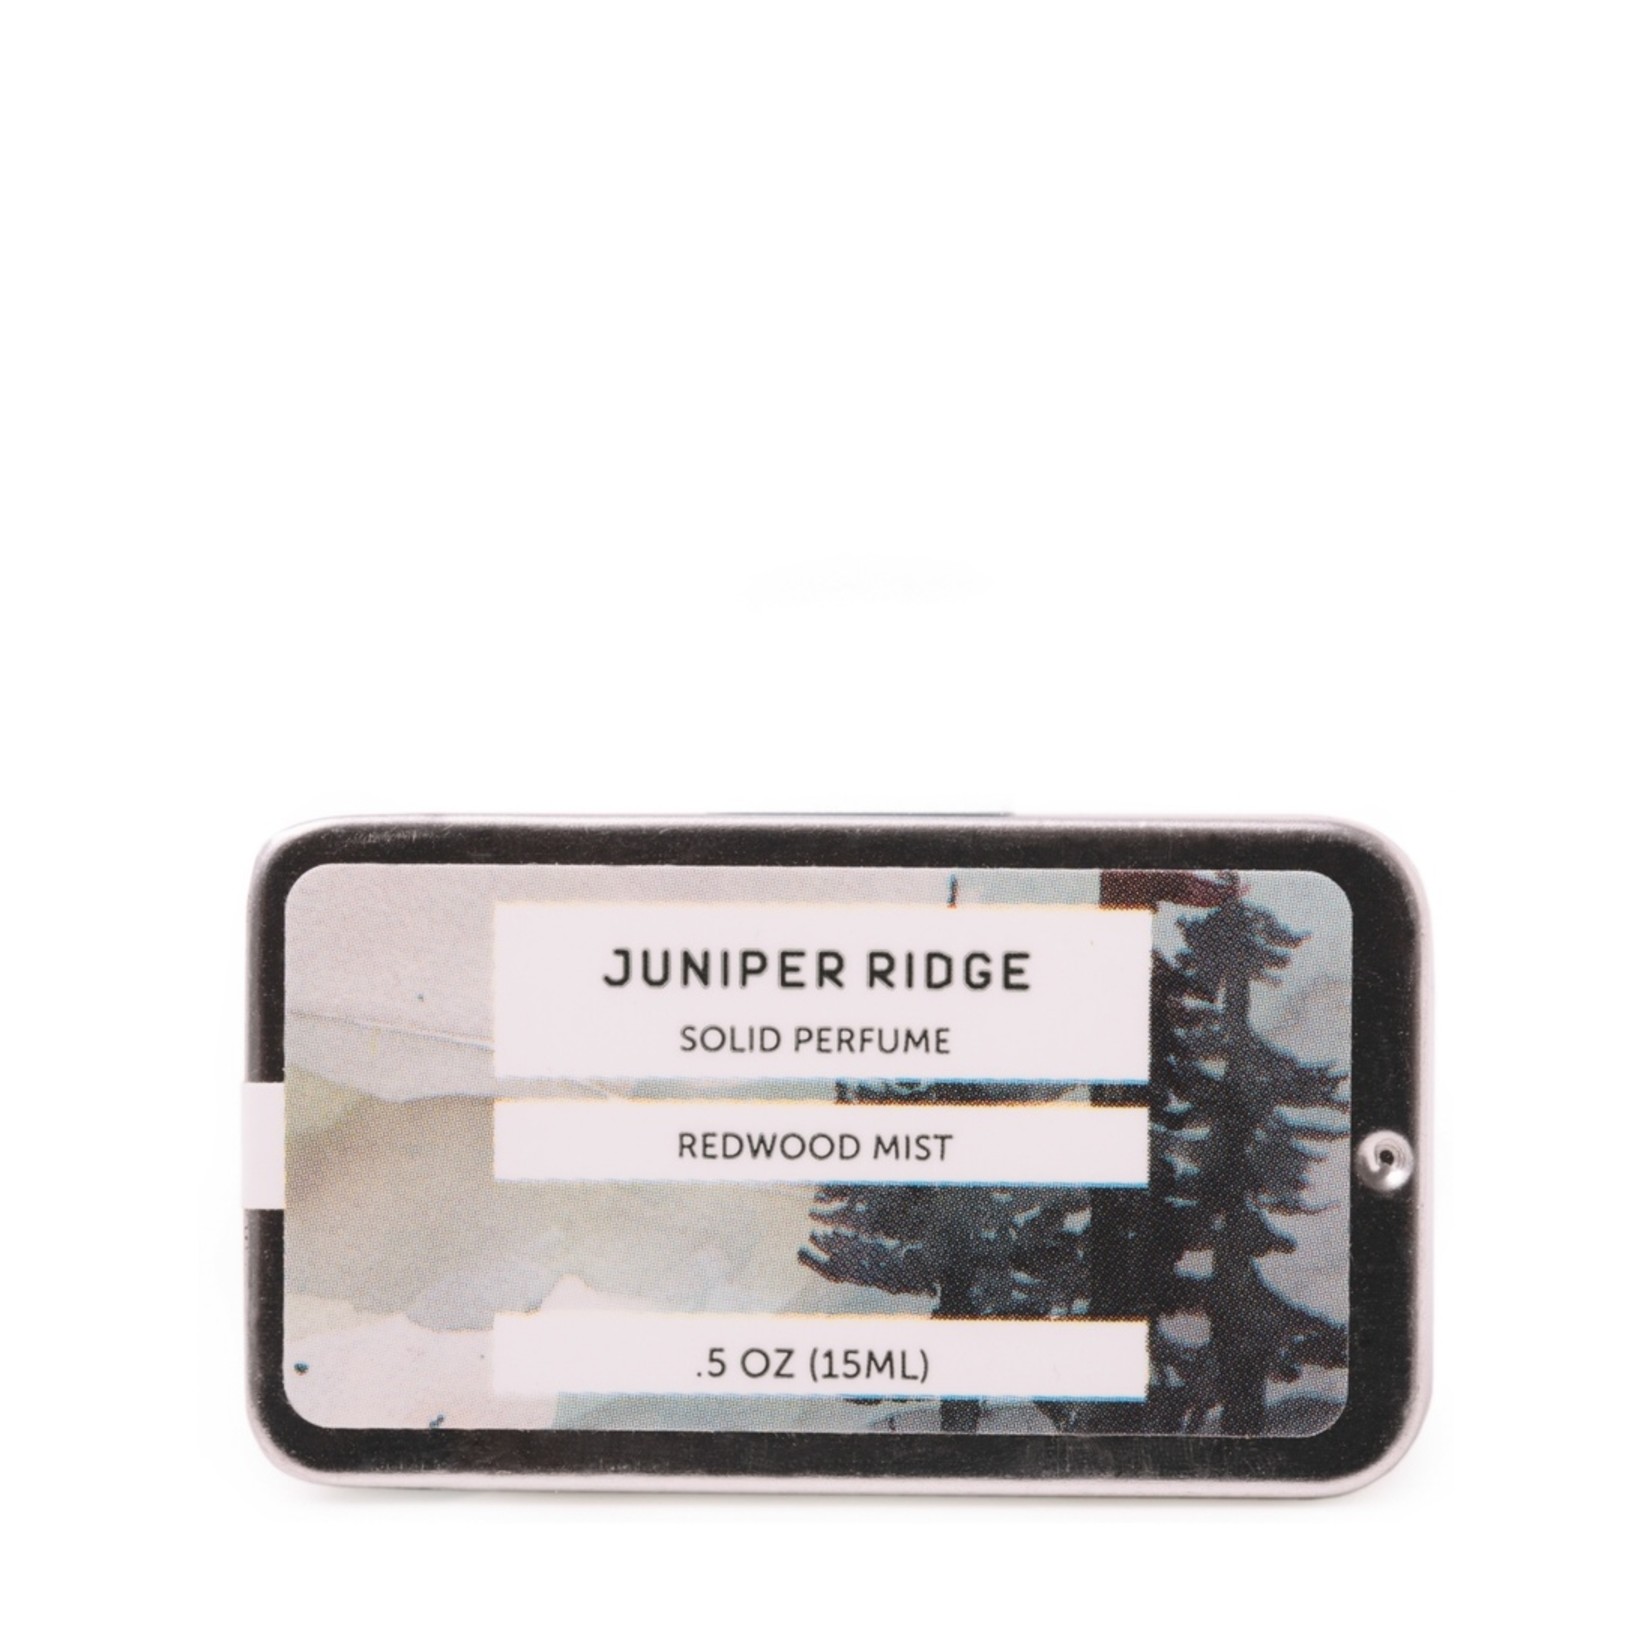 Juniper Ridge redwood mist solid perfume